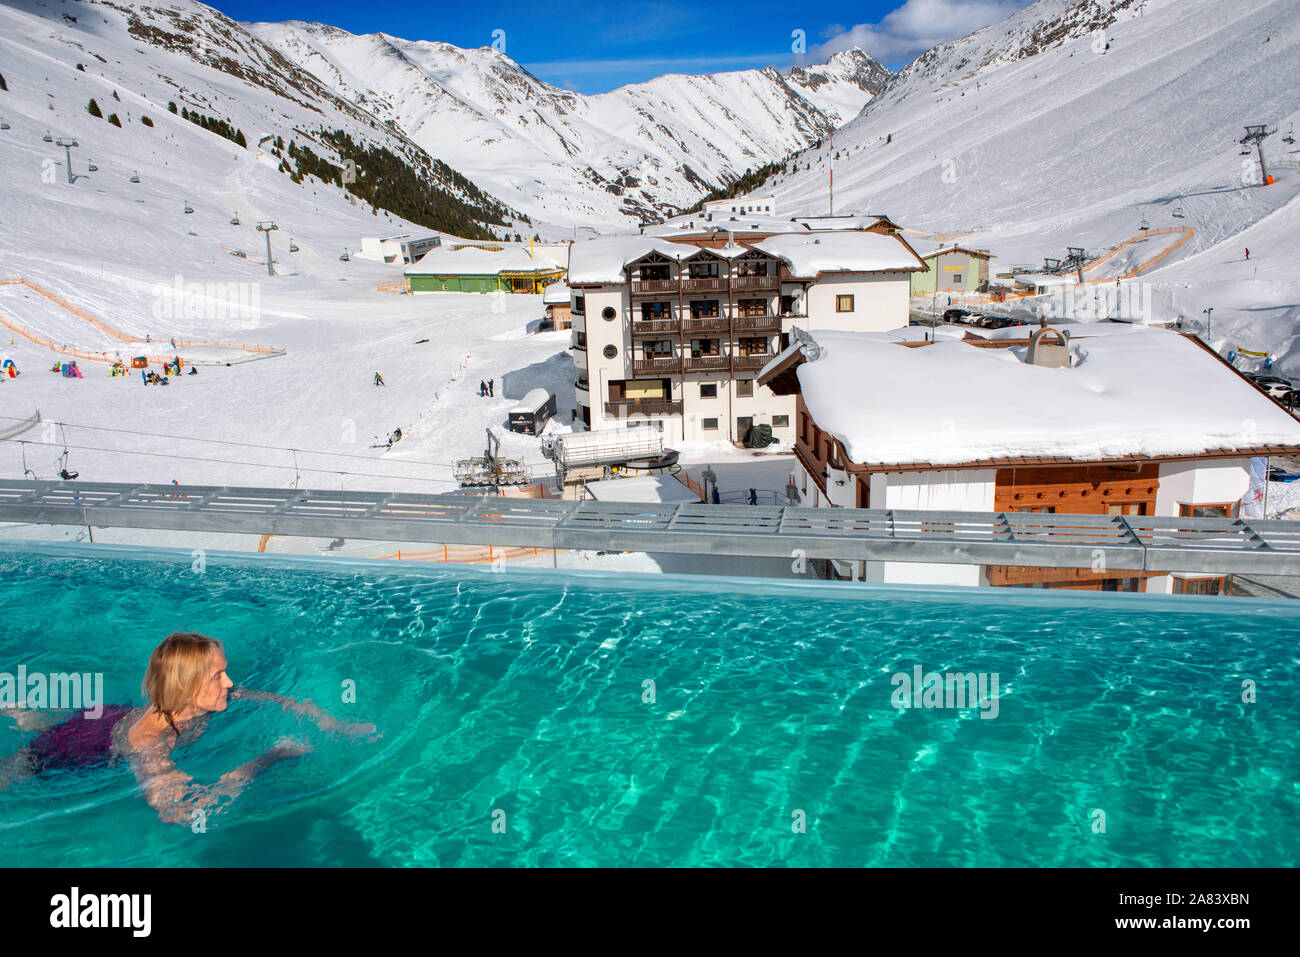 Kuhtai sky resort village and ski slopes near Innsbruck Tyrol Austria. Swimming pool of the Mooshaus Hotel. Stock Photo